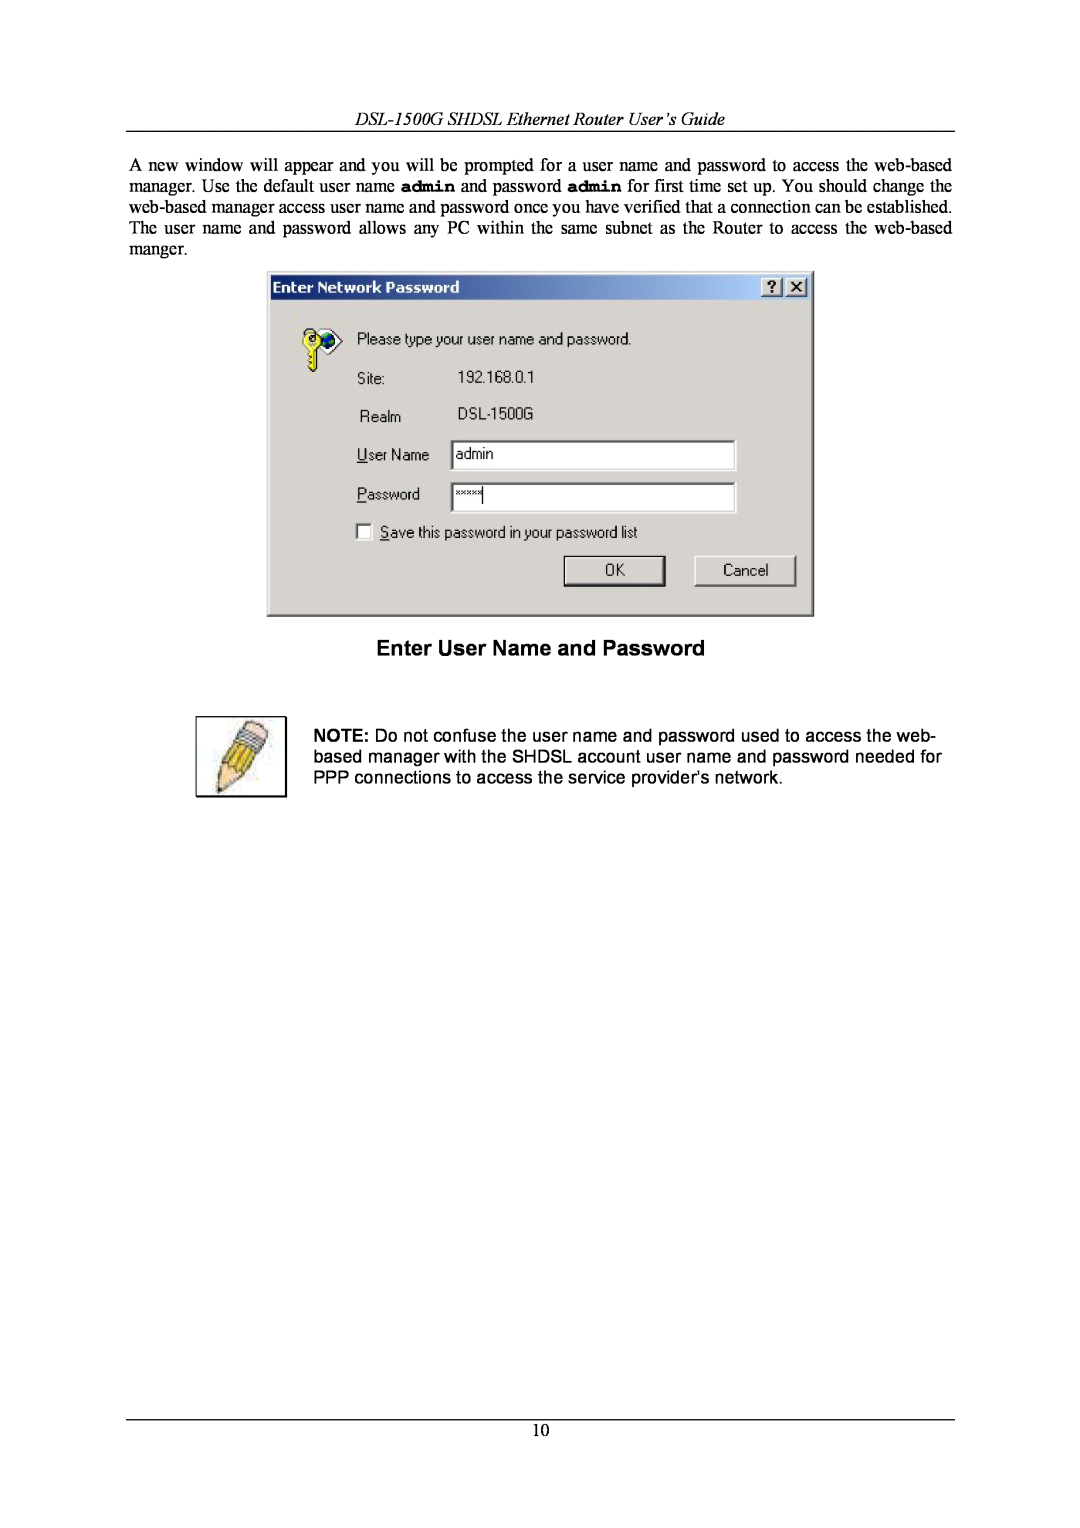 D-Link manual Enter User Name and Password, DSL-1500G SHDSL Ethernet Router User’s Guide 